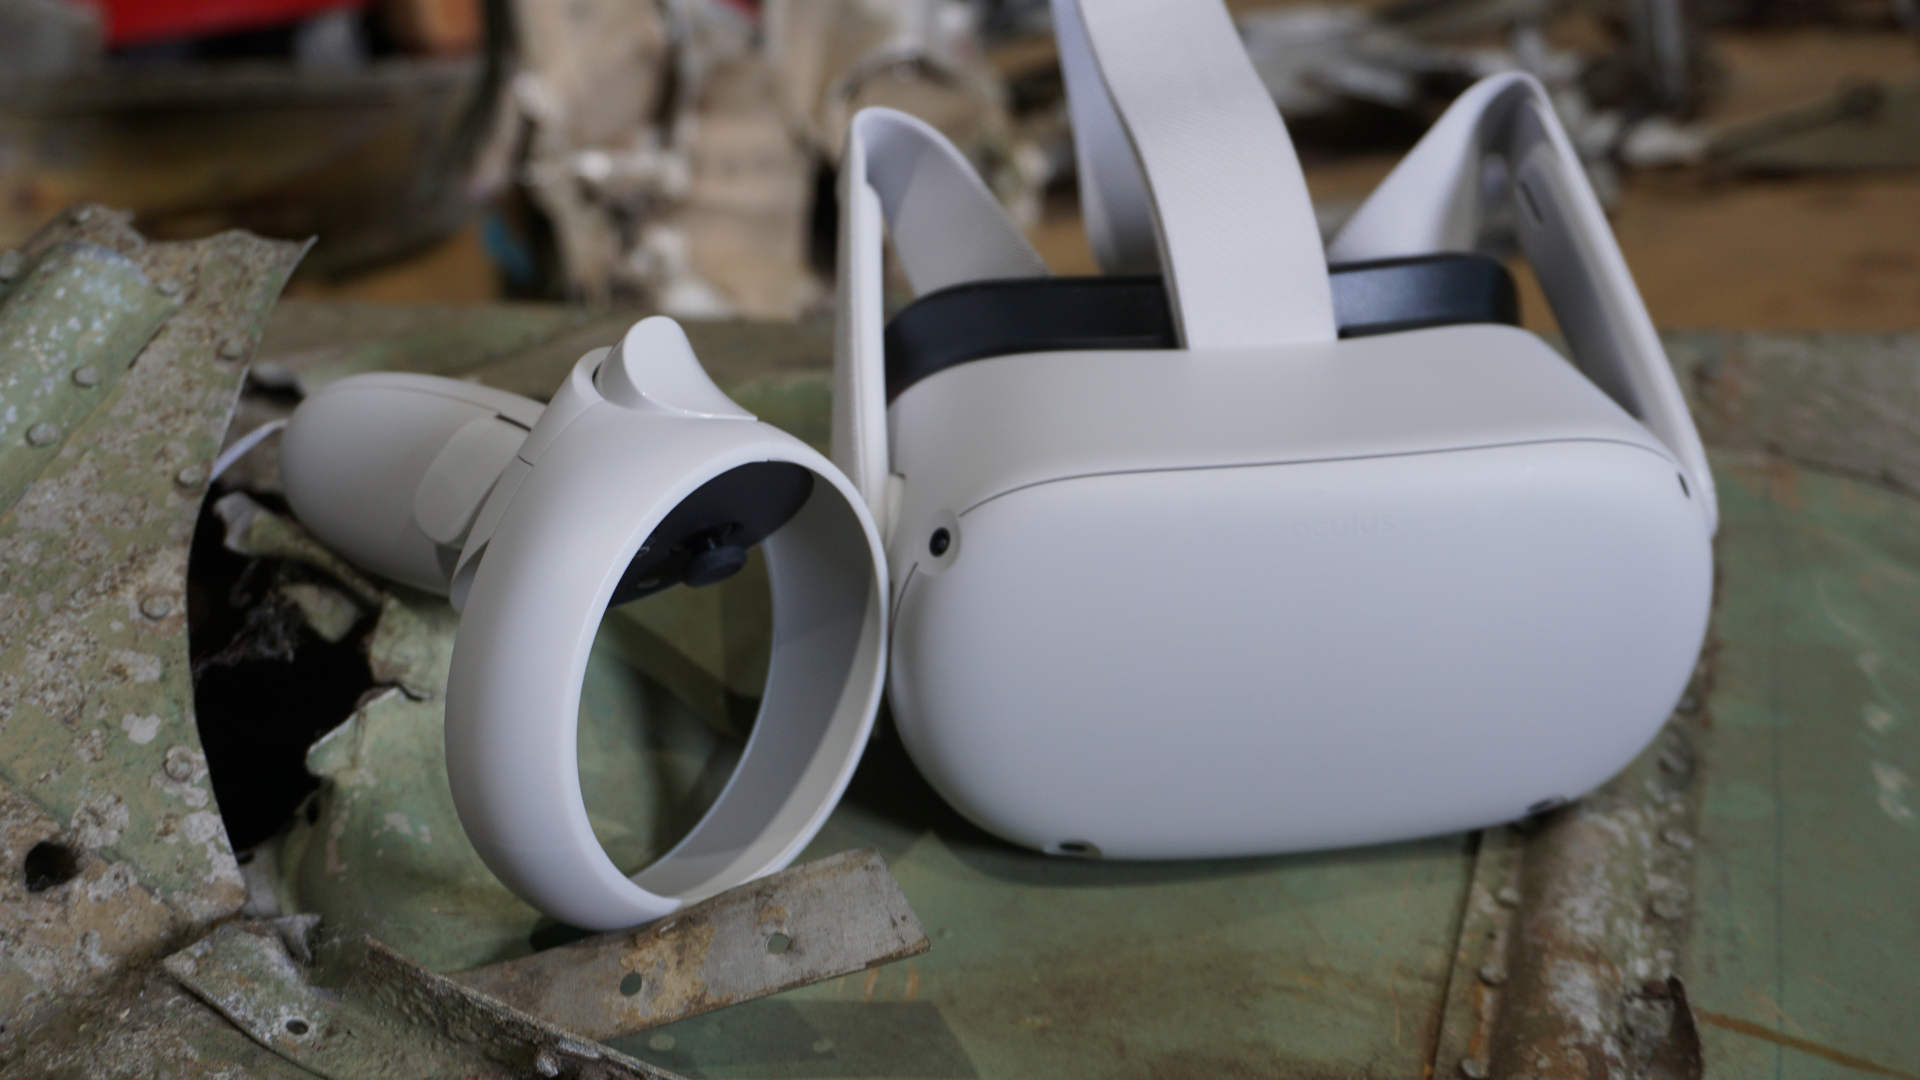 VR headset sitting on Barracuda wreckage